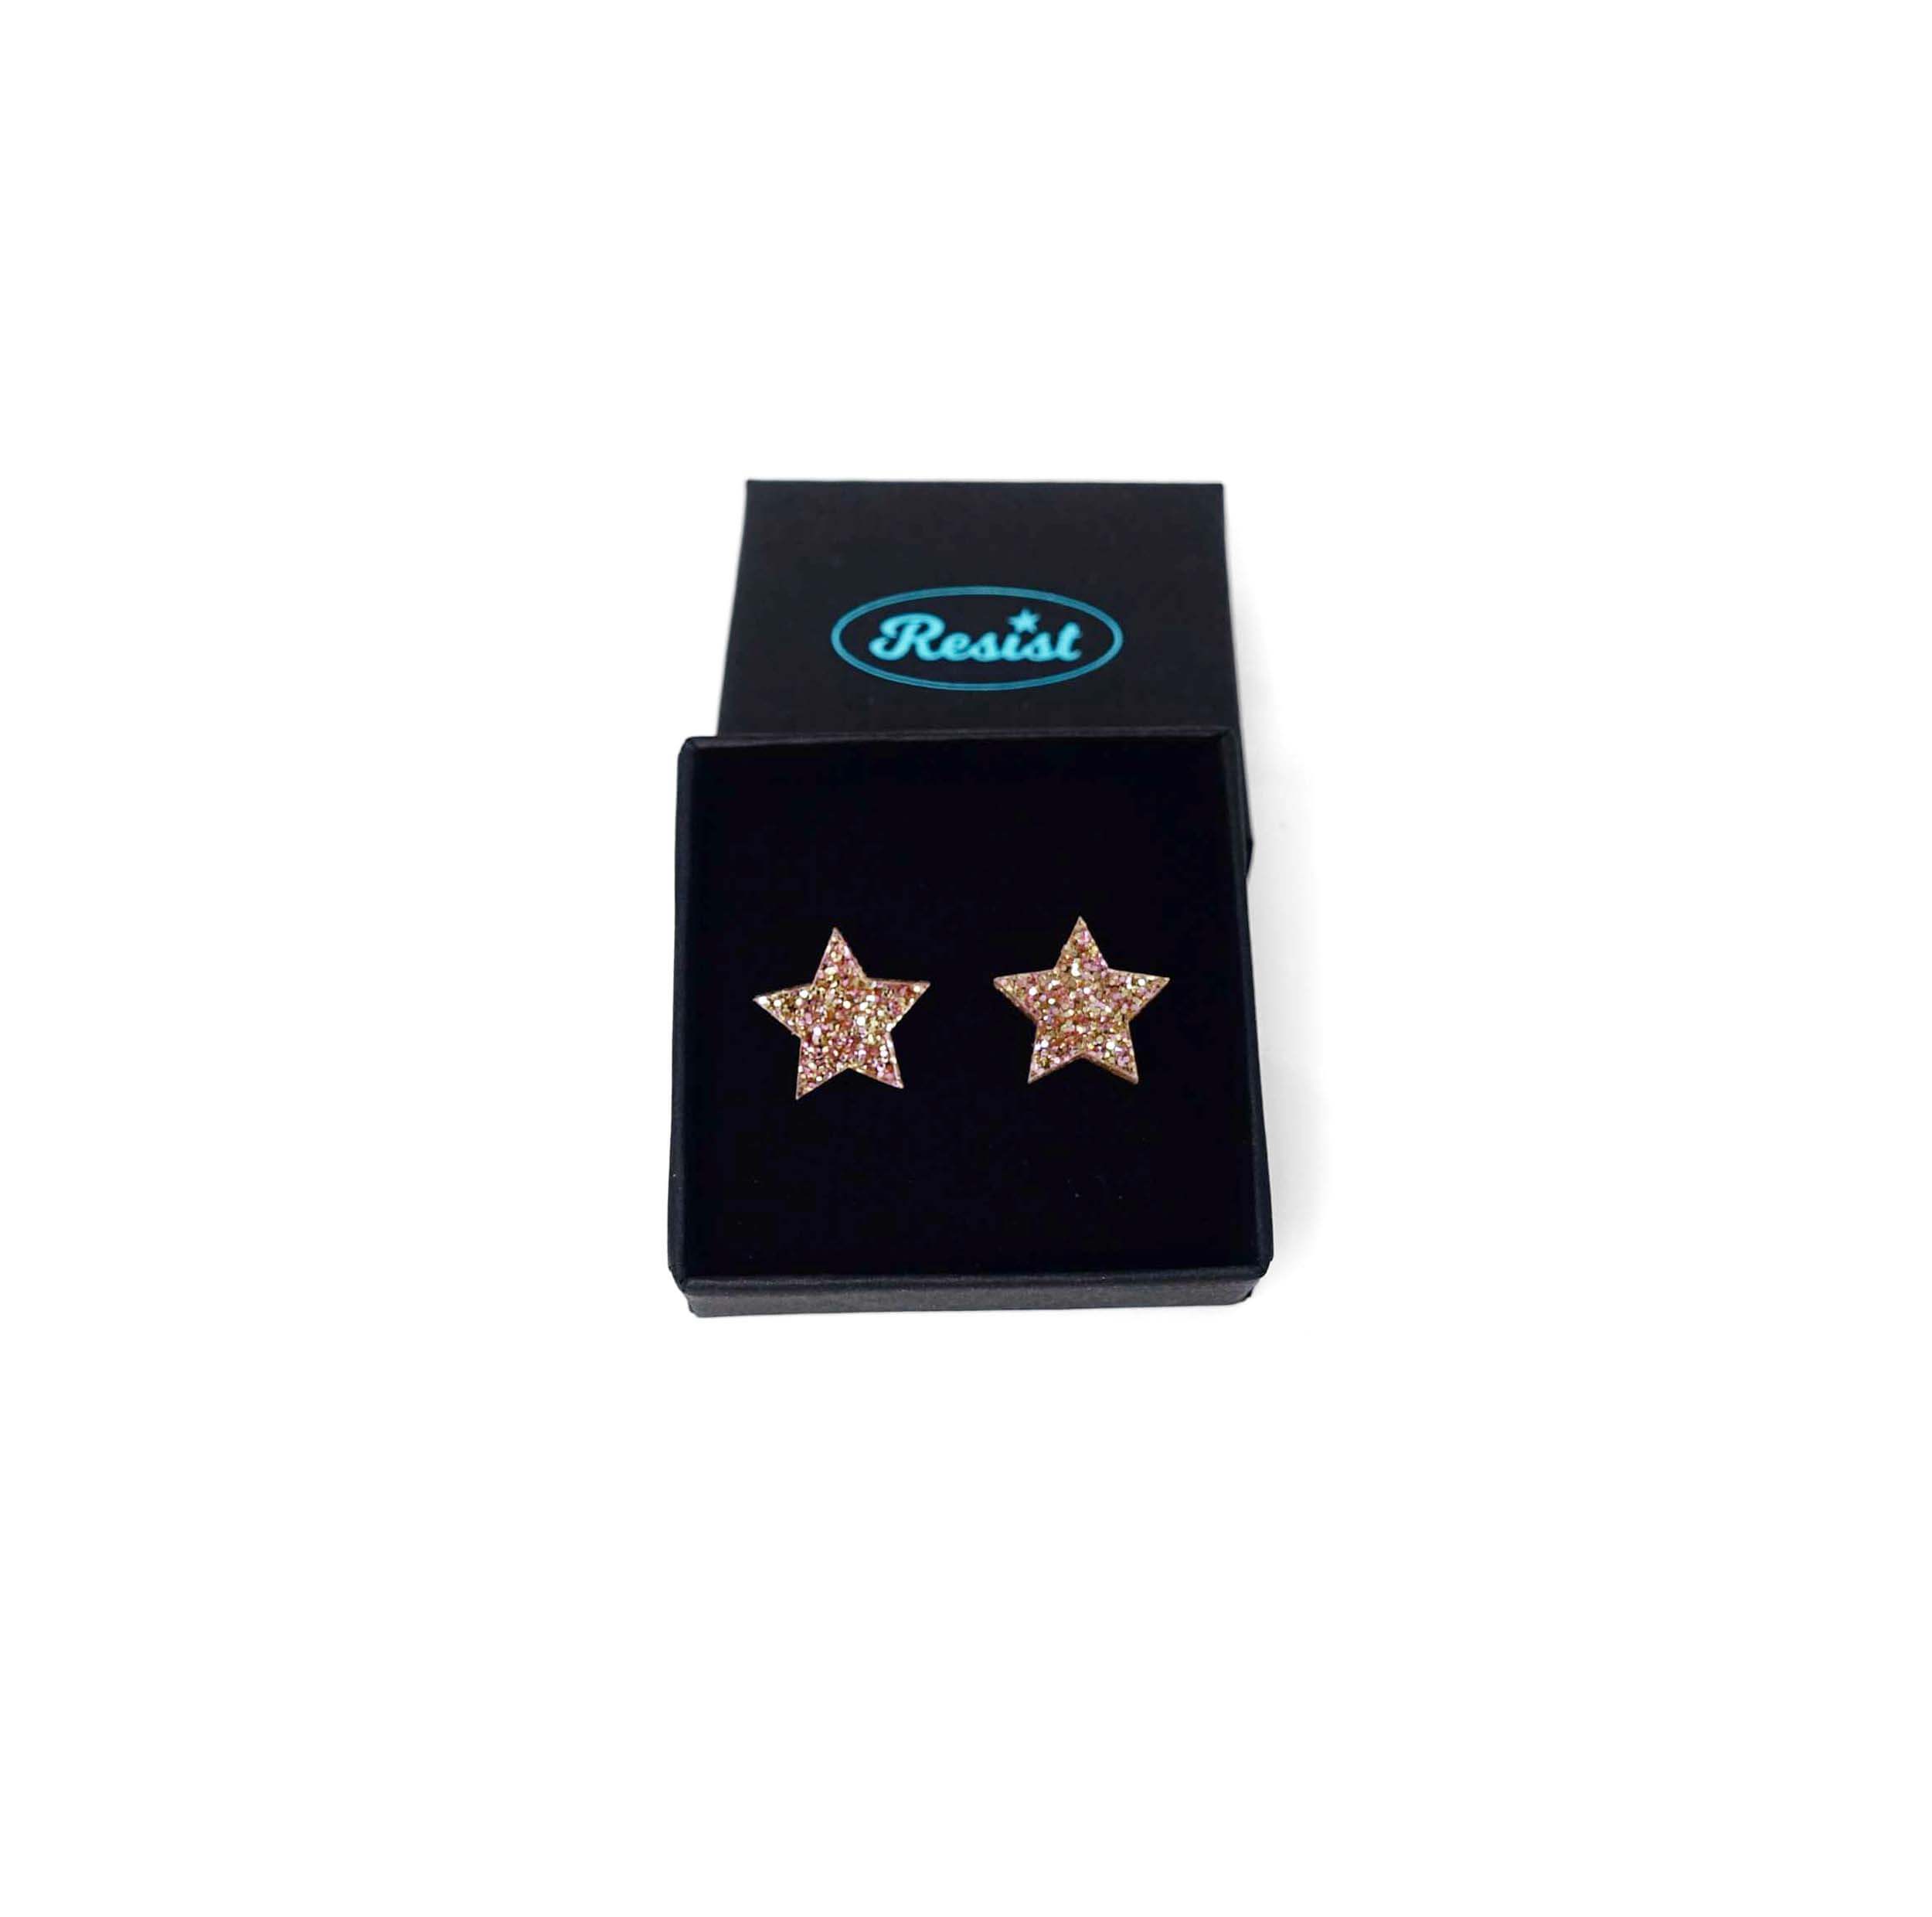 Big star earrings in pink fizz glitter shown in a Wear and Resist gift box. 